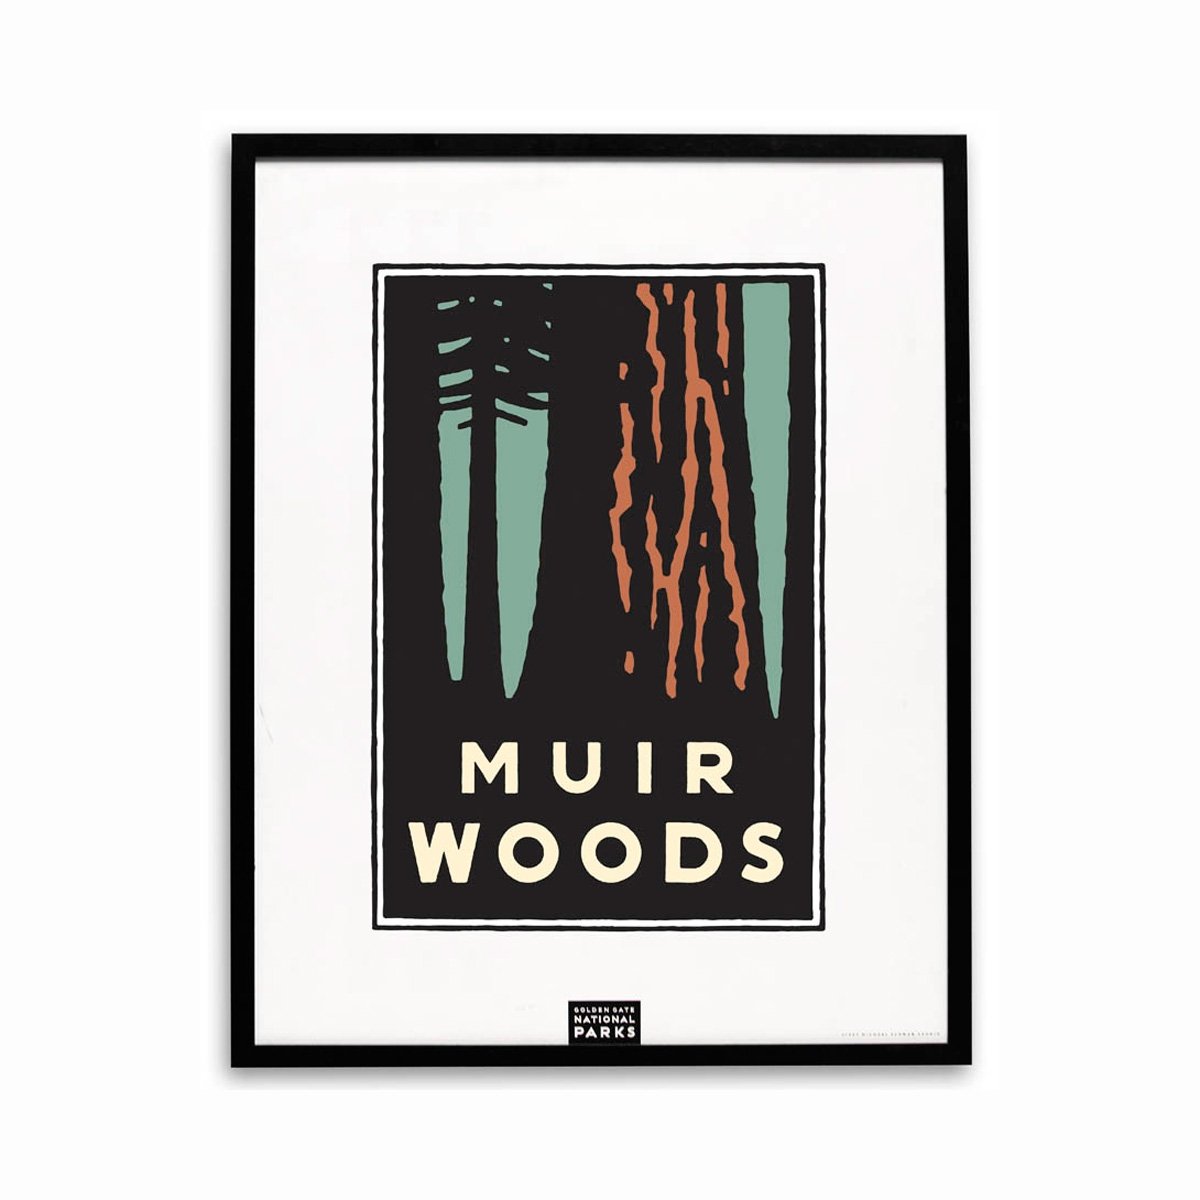 Framed 22 x 28 inch Muir Woods silk-screened poster, art by Michael Schwab.